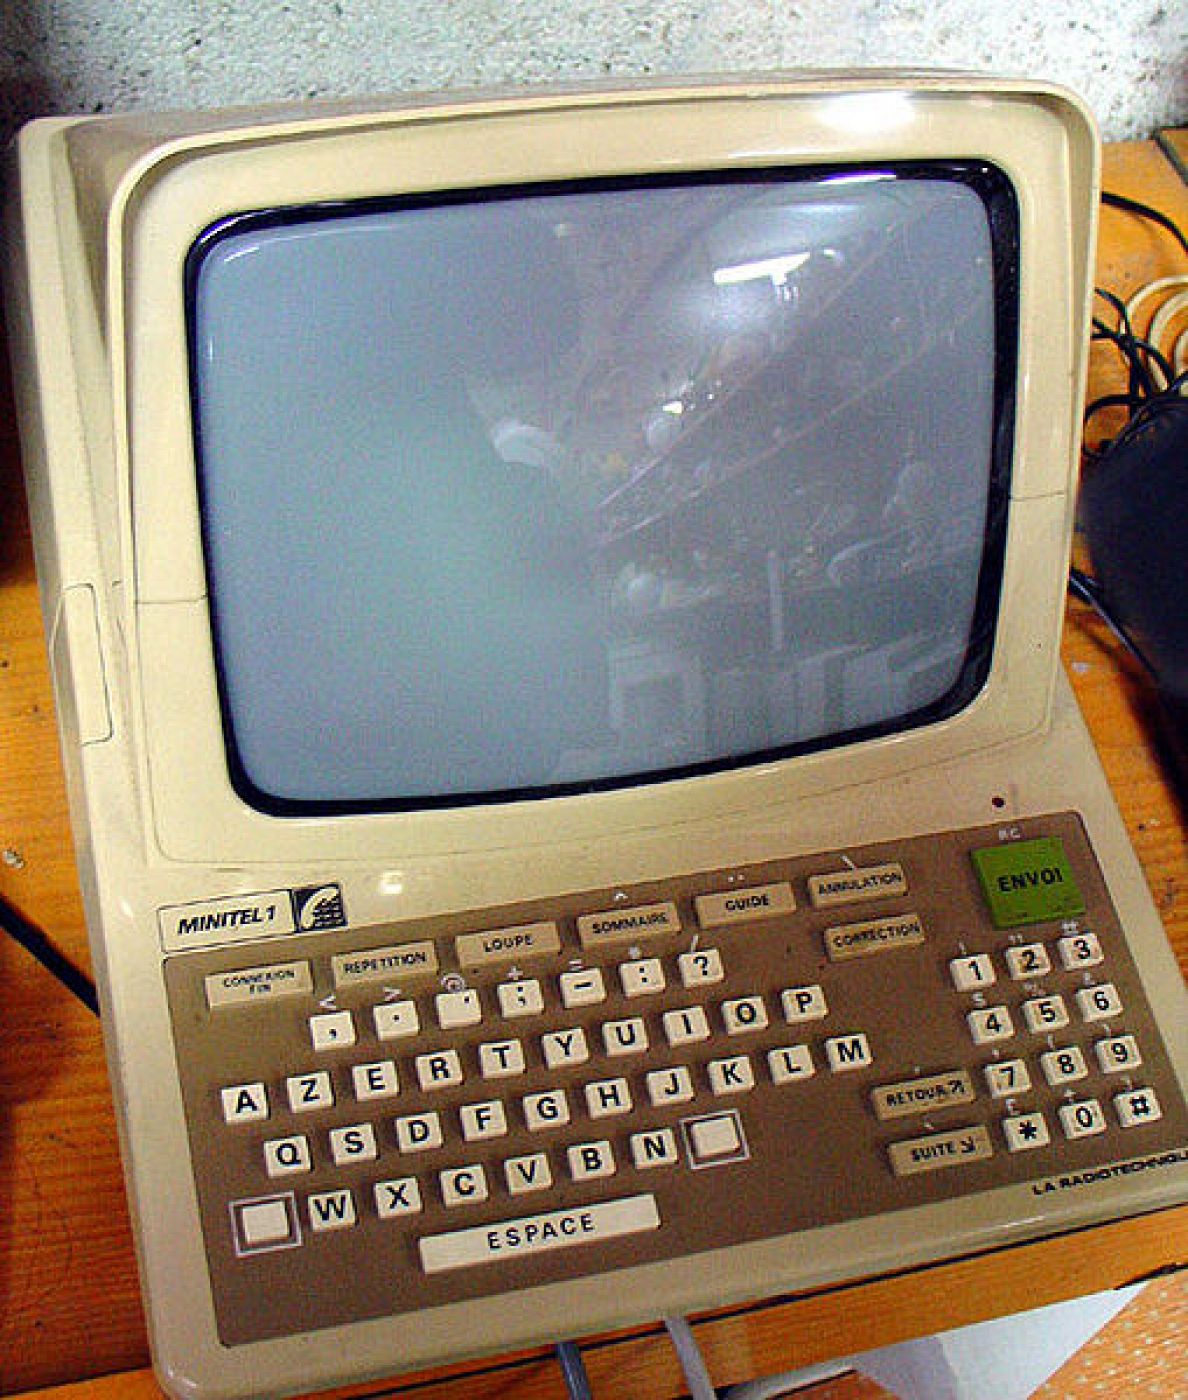 Mini-pantalla con teclado para conectar con minitel.